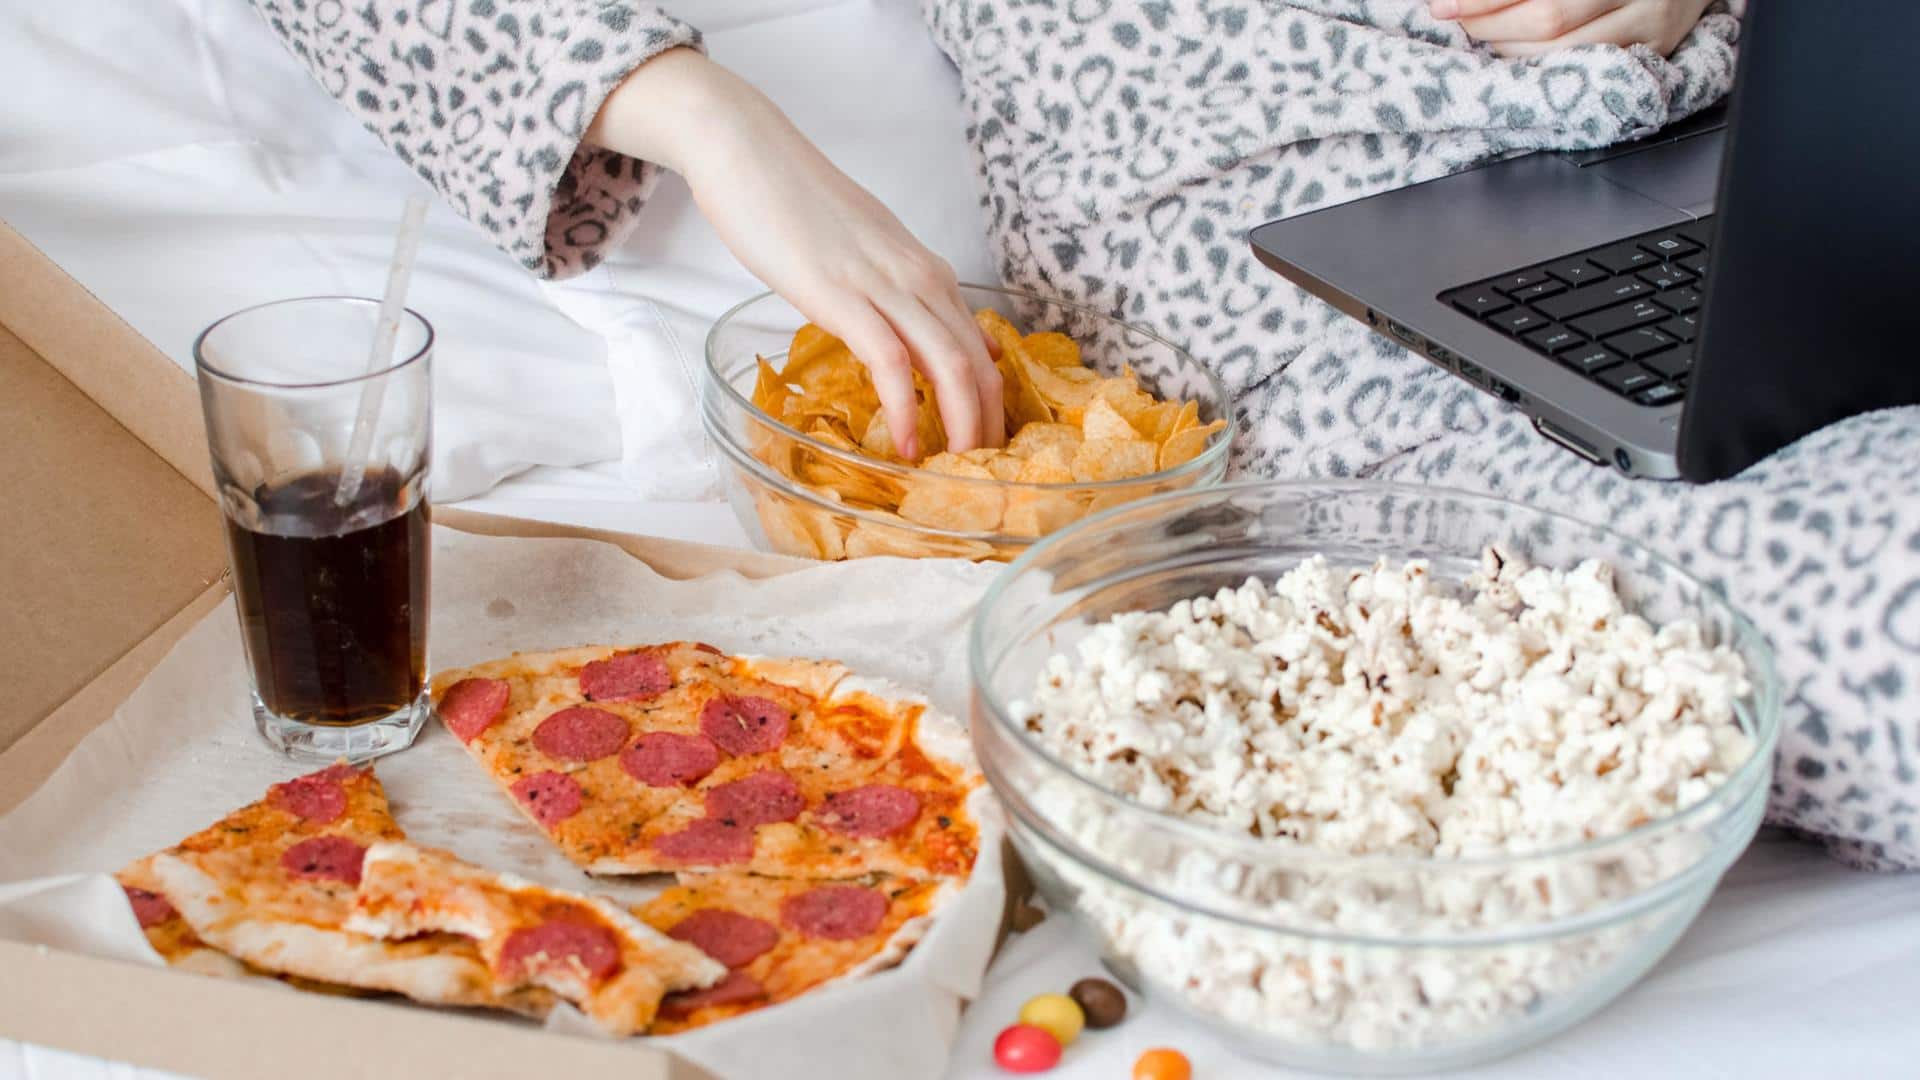 Expert reveals 5 worst foods people eat before bed